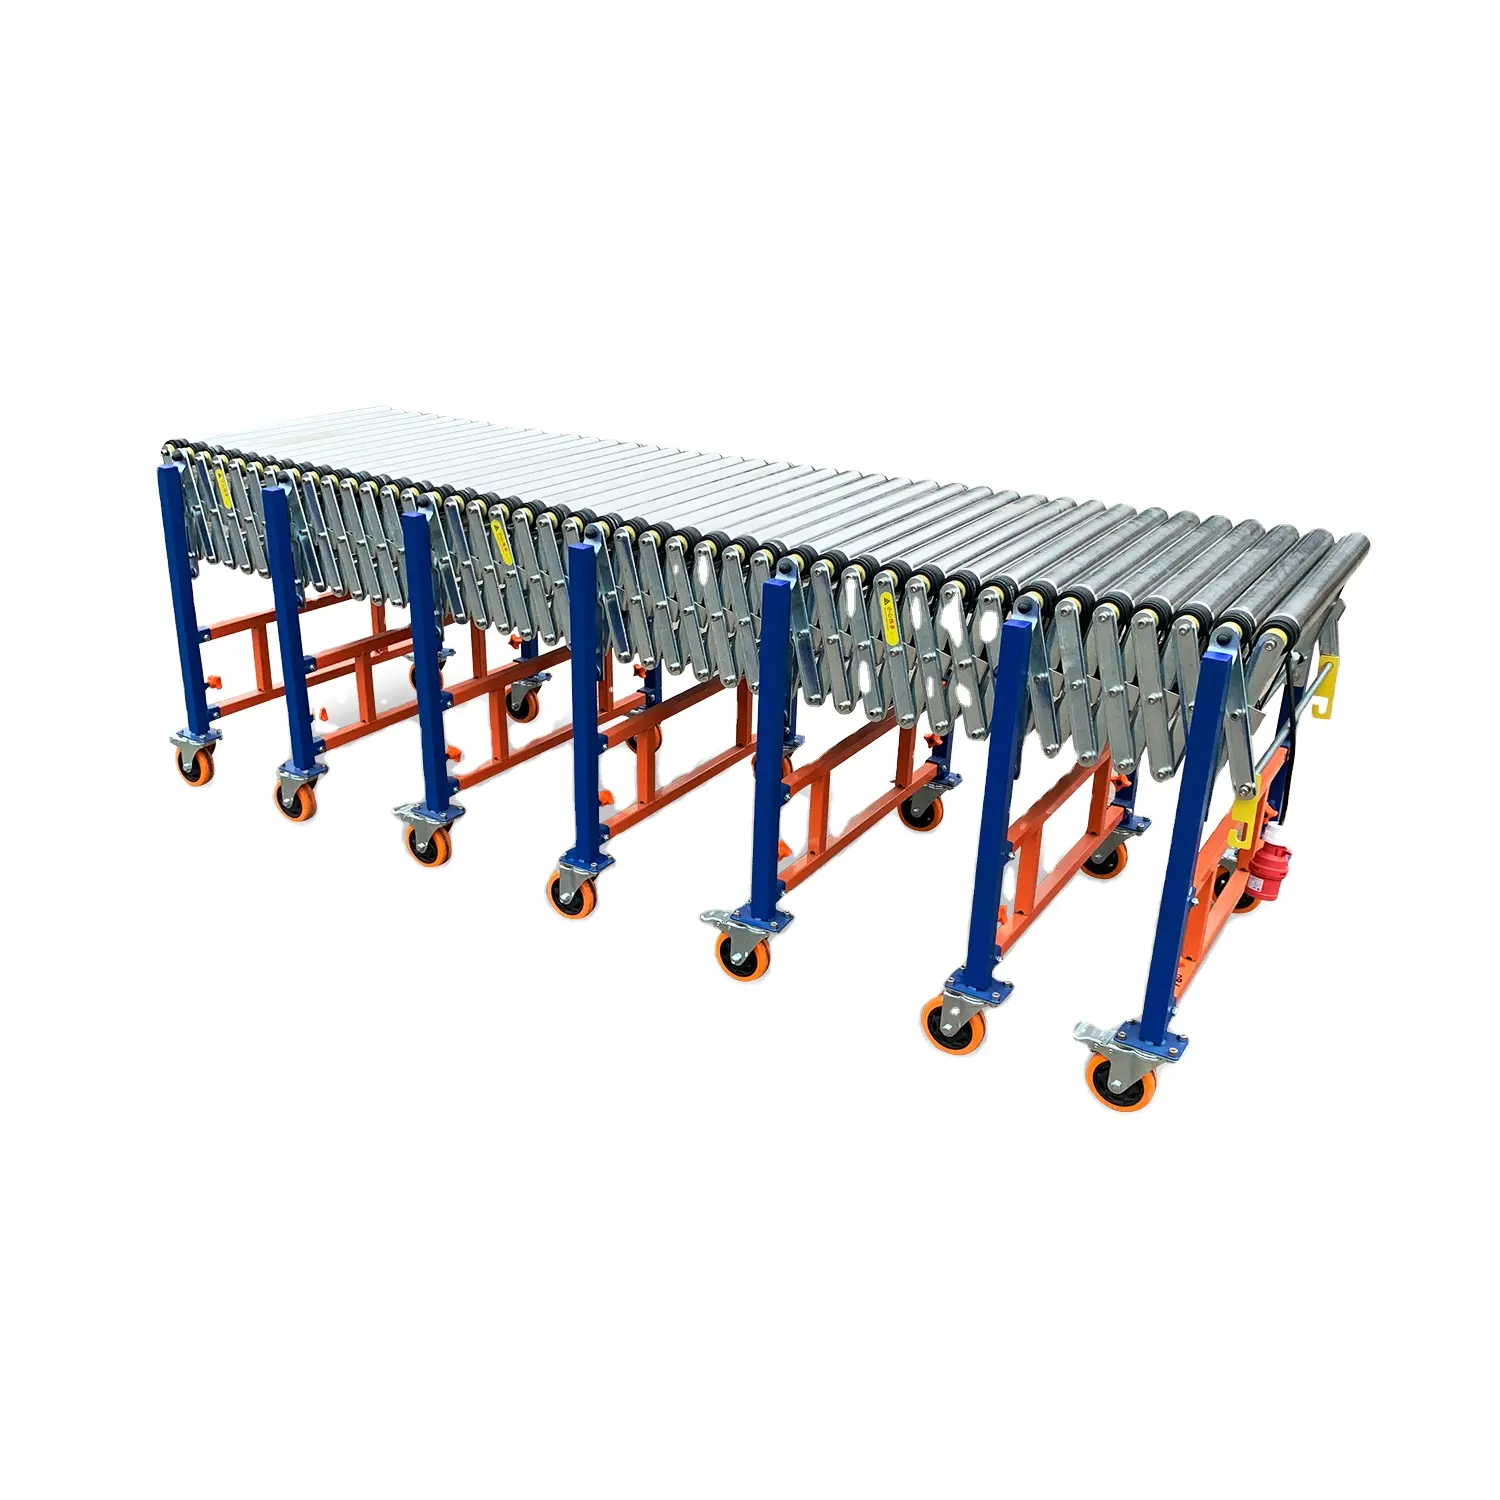 Powered poly v belt conveyor line double directions running loading unloading box durable flexible roller conveyor